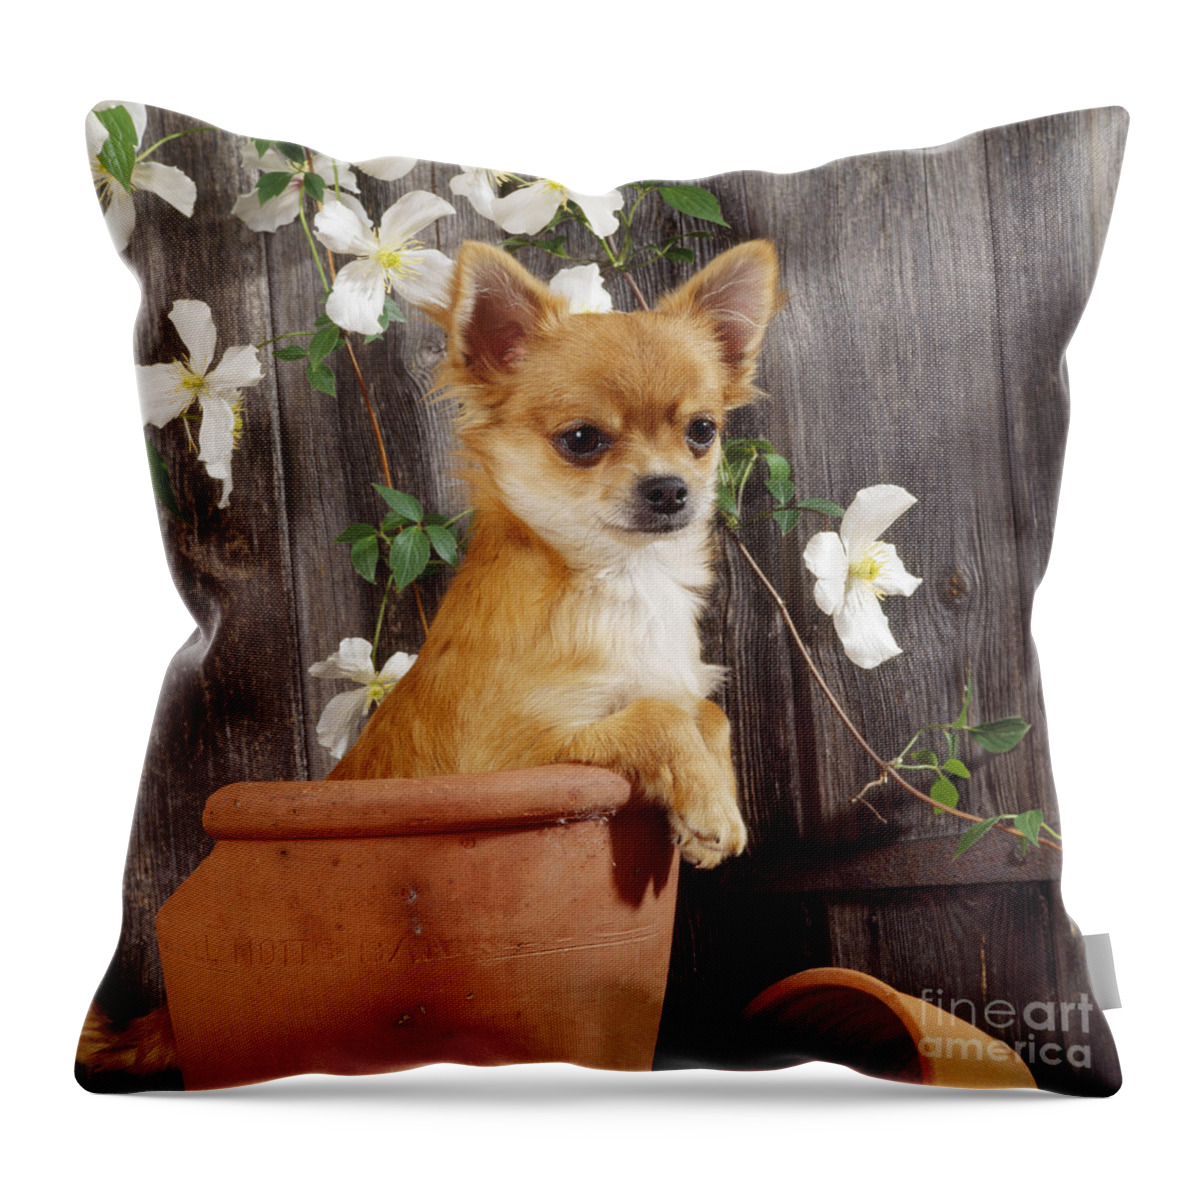 Chihuahua Throw Pillow featuring the photograph Chihuahua Dog In Flowerpot by John Daniels